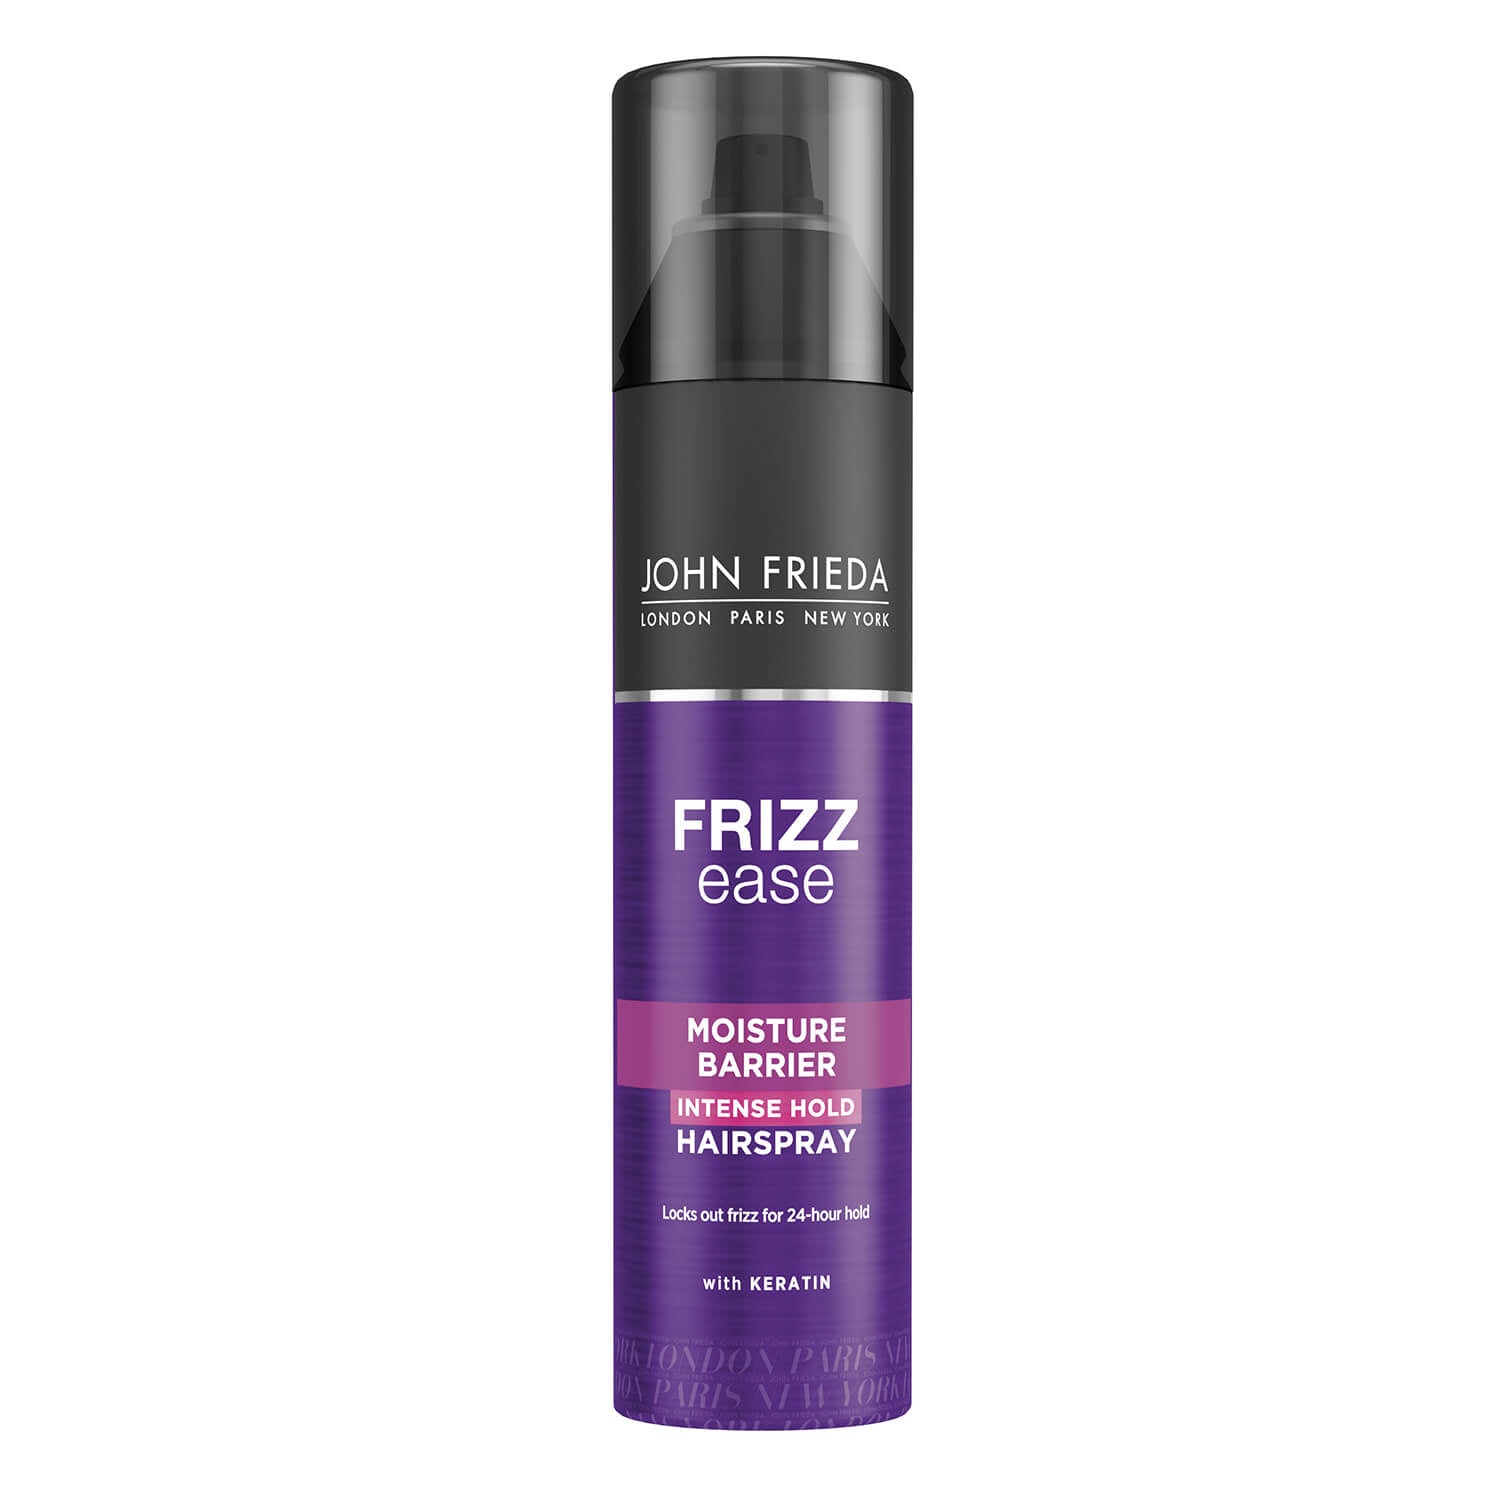 John Frieda Frizz Ease Moisture Barrier Hairspray 1 Shaws Department Stores